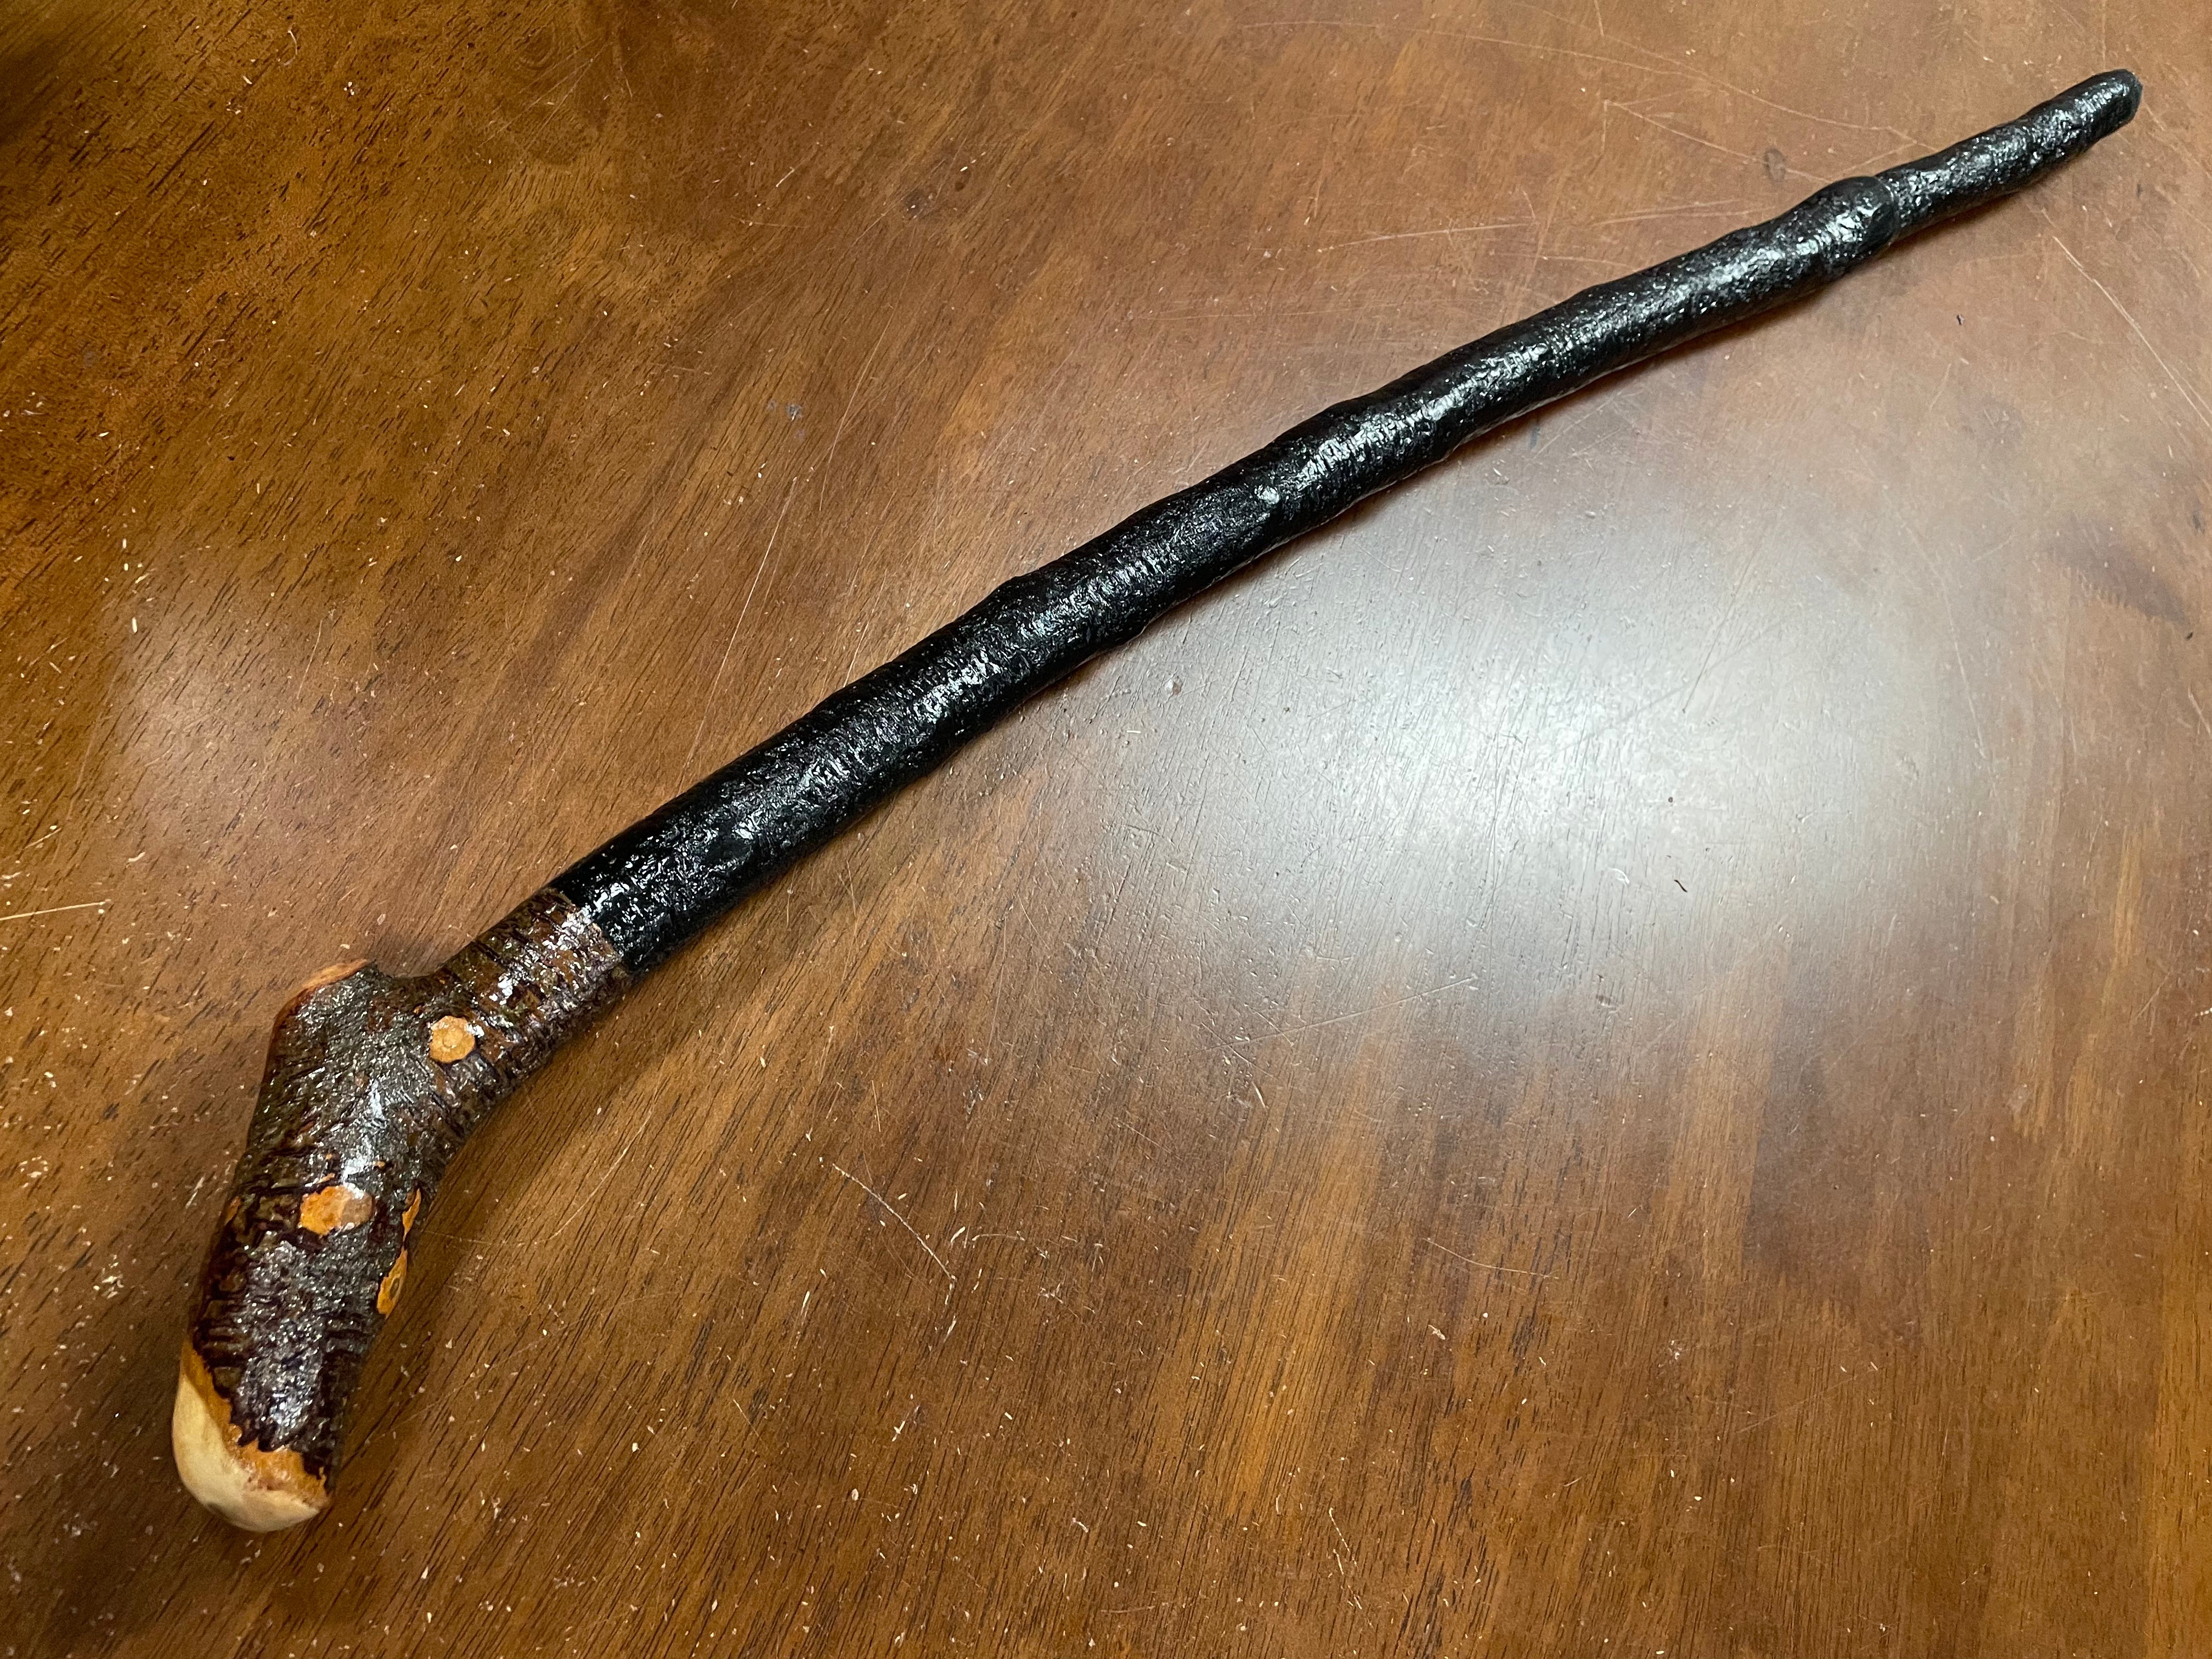 Blackthorn Walking Stick 34 1/2 inch  - Handmade in Ireland